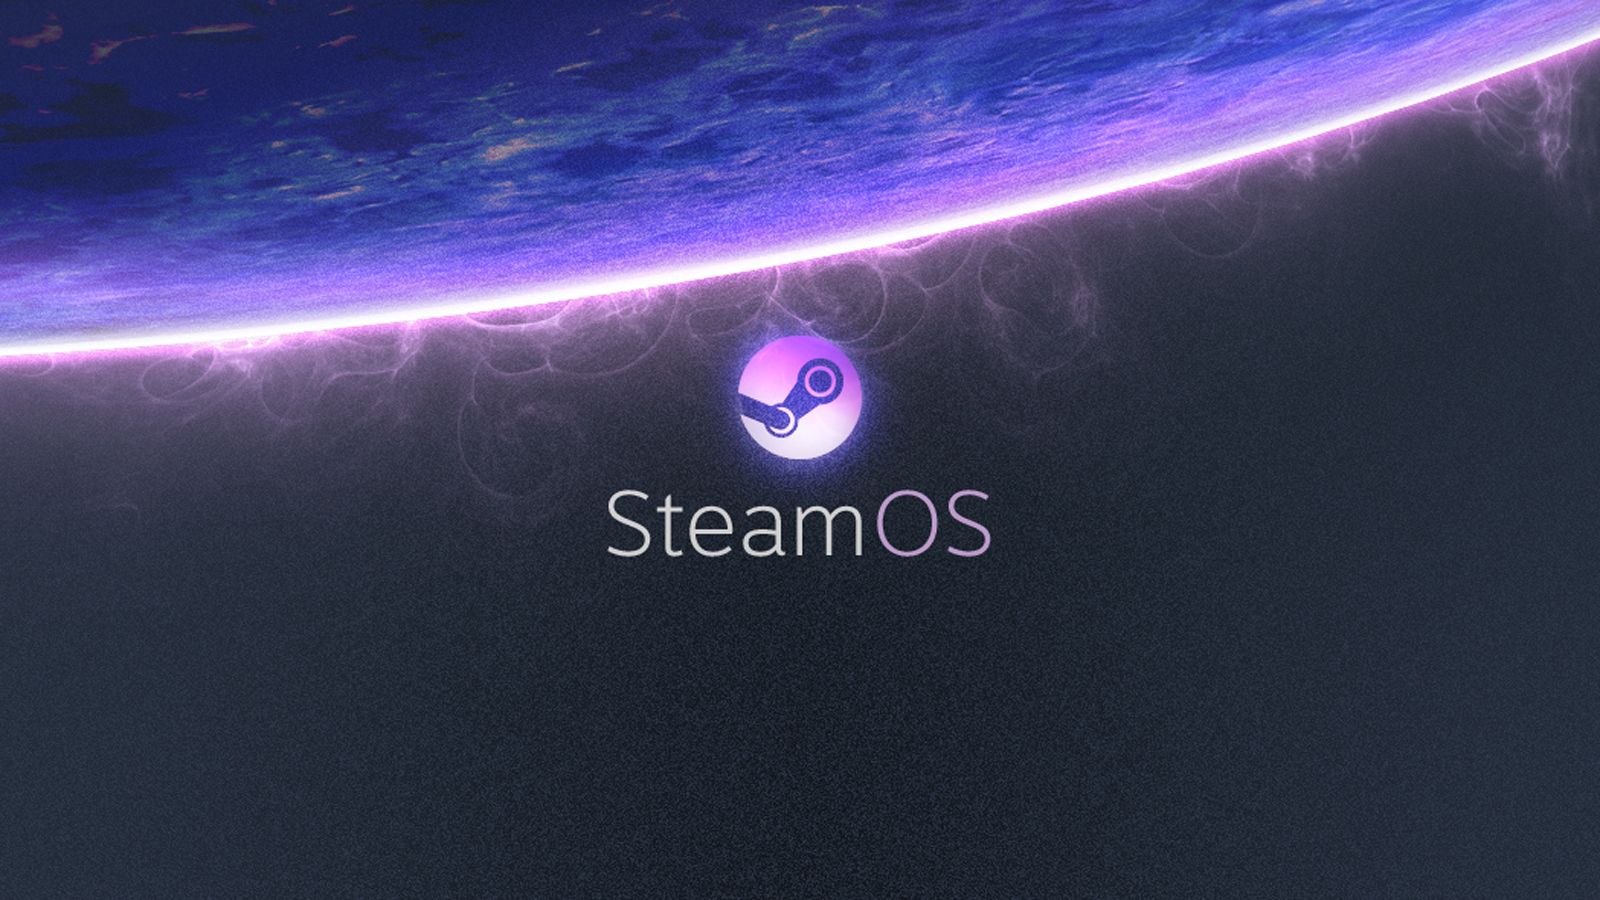 Steam 2013. STEAMOS Holo. Steam os Wallpaper. Steam systems